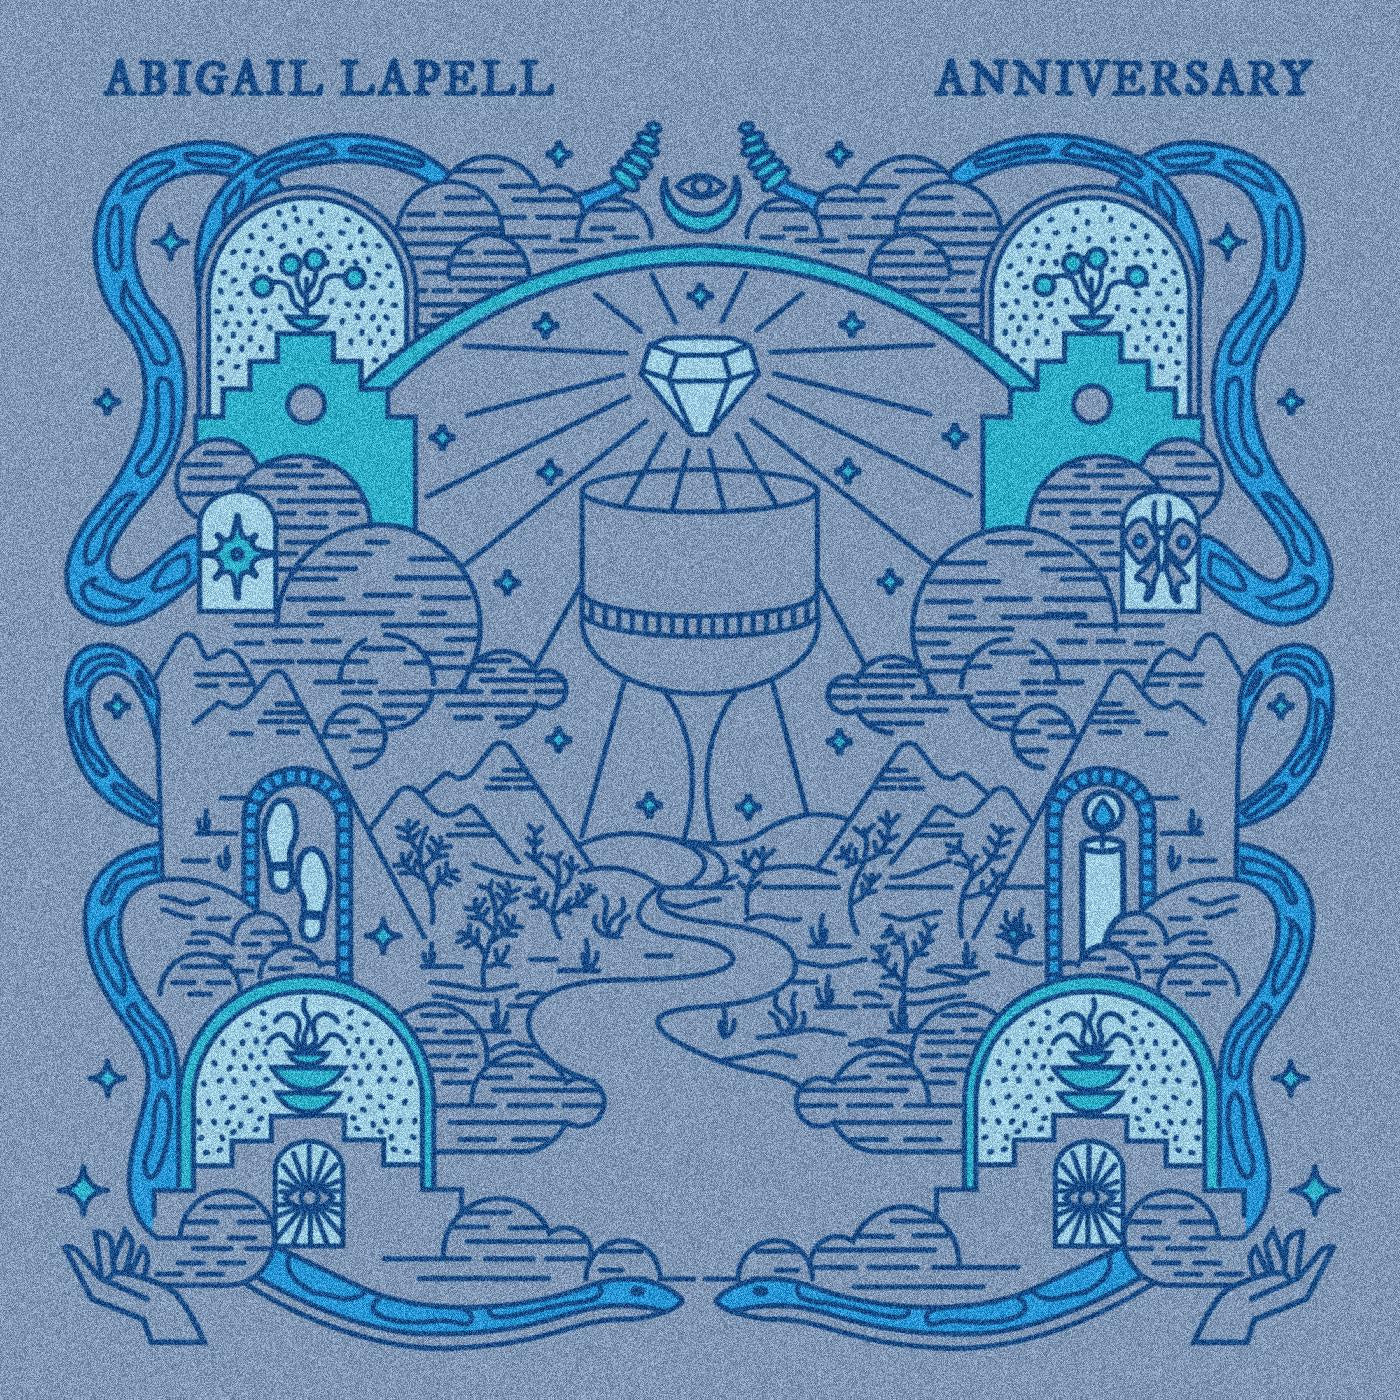 Abigail Lapell - Anniversary [Aqua Blue Vinyl]